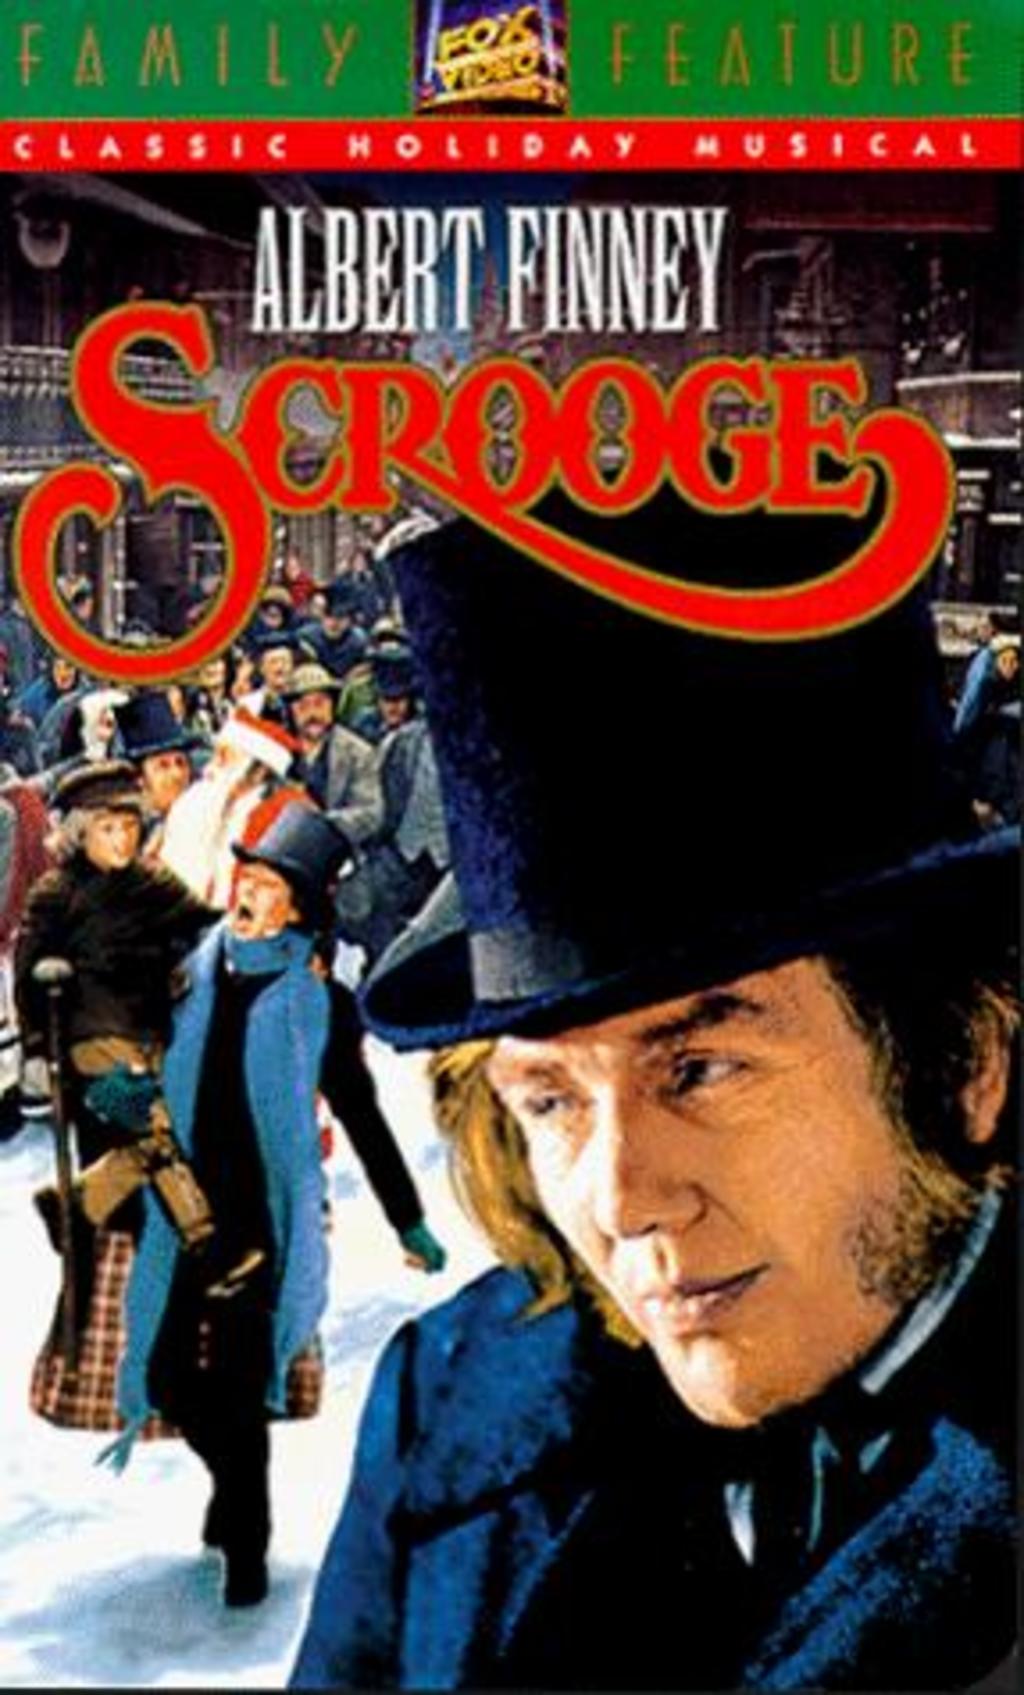 Watch Scrooge on Netflix Today! | NetflixMovies.com